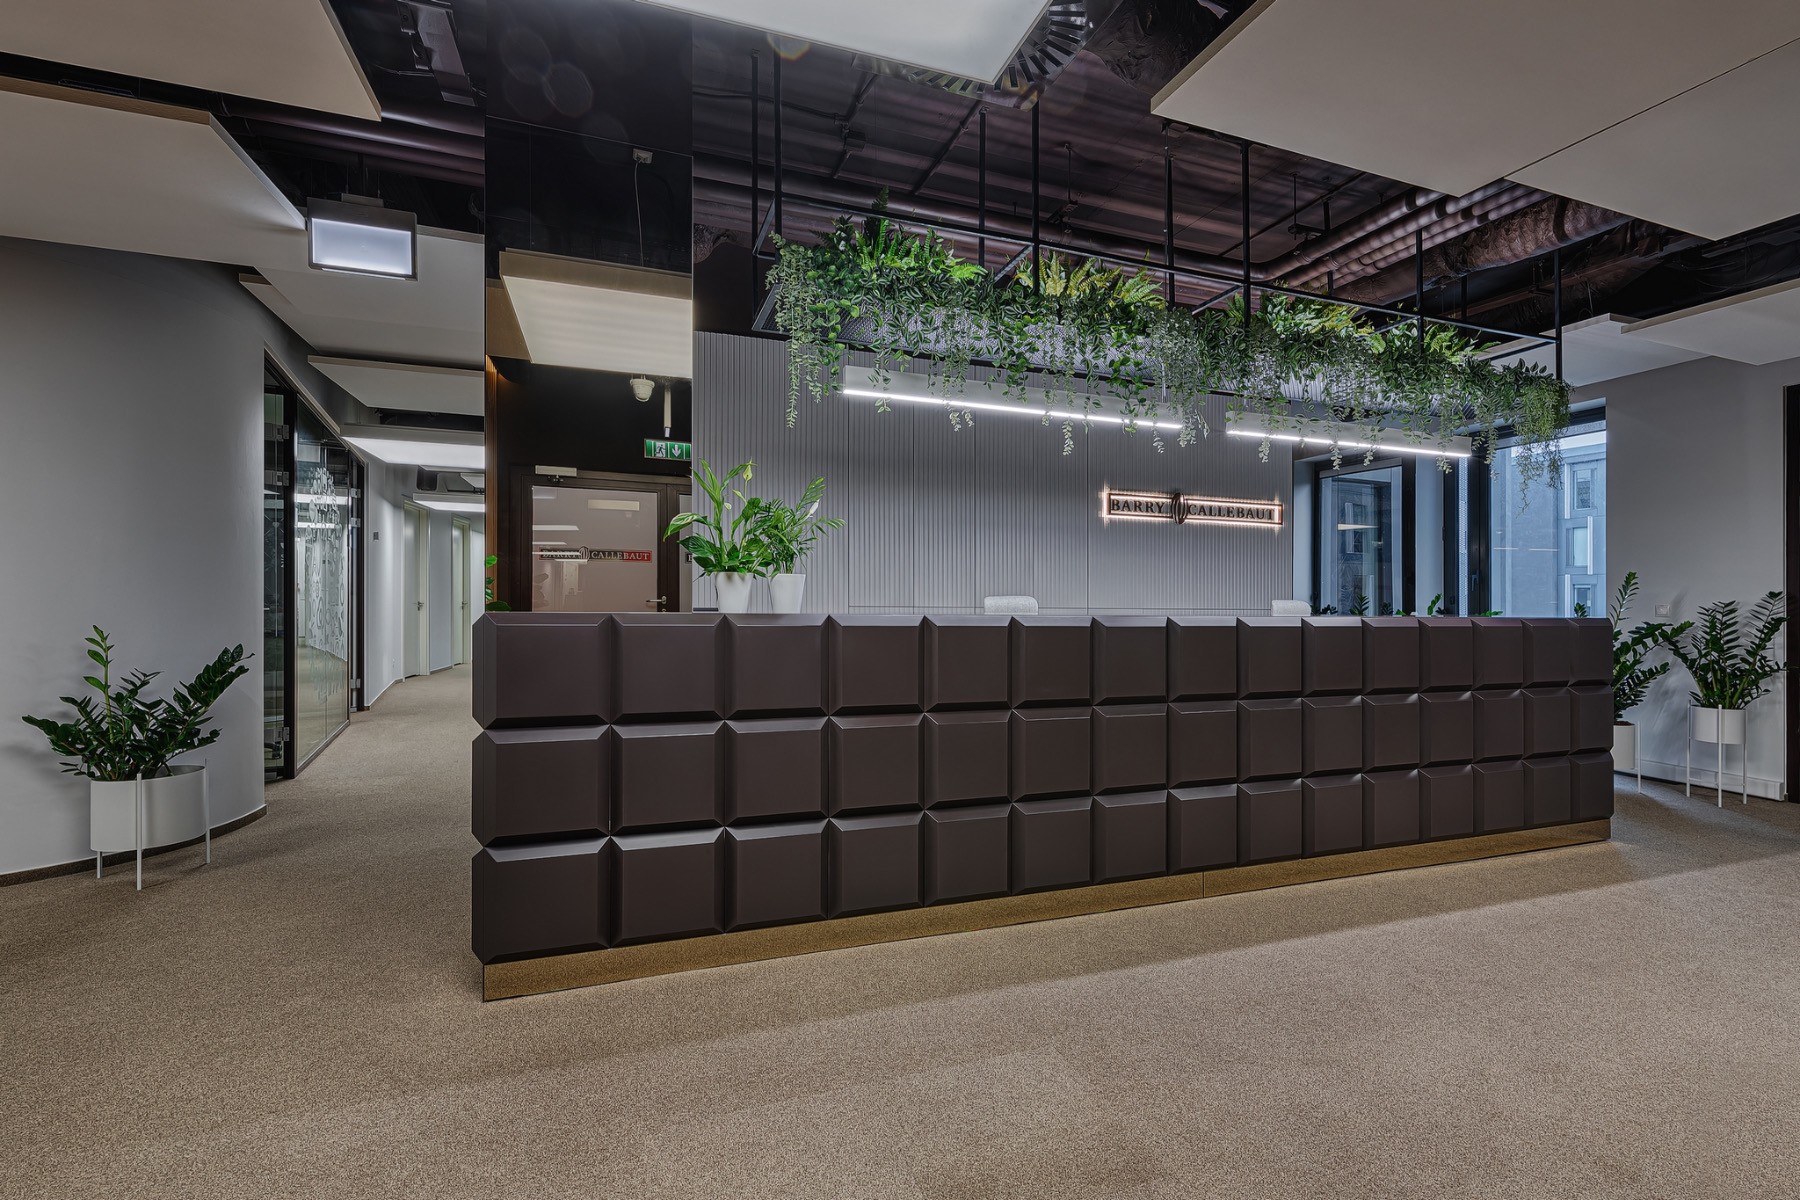 A Look Inside Barry Callebaut’s New Lodz Office